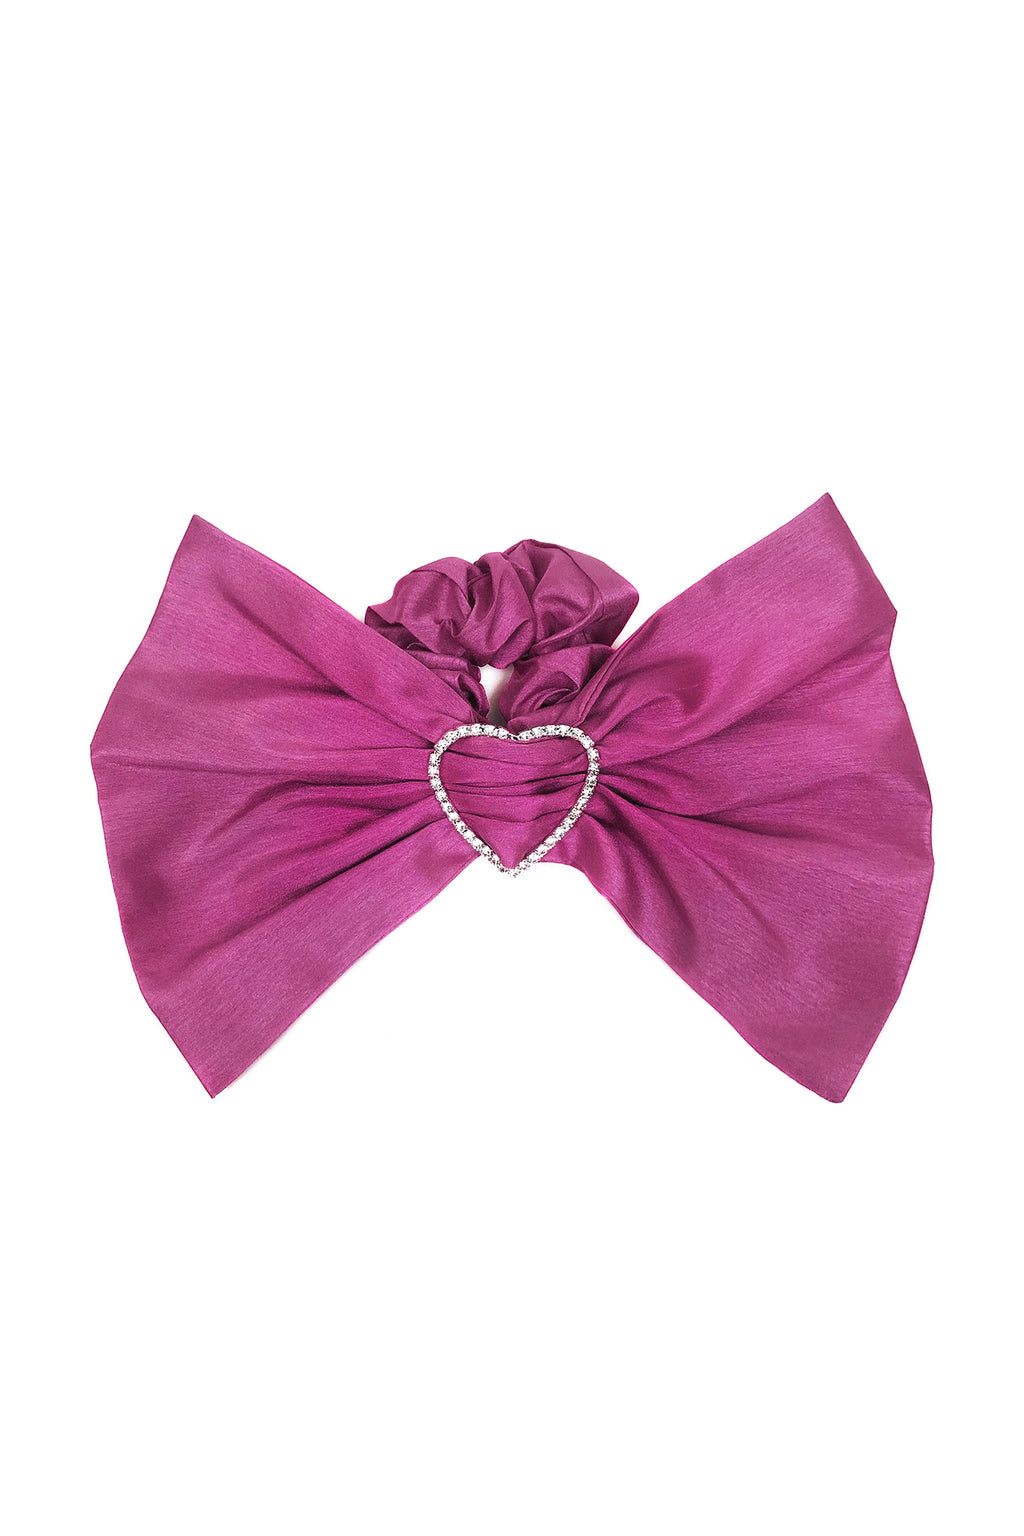 Merrfer BIG Bow Scrunchie, Pink